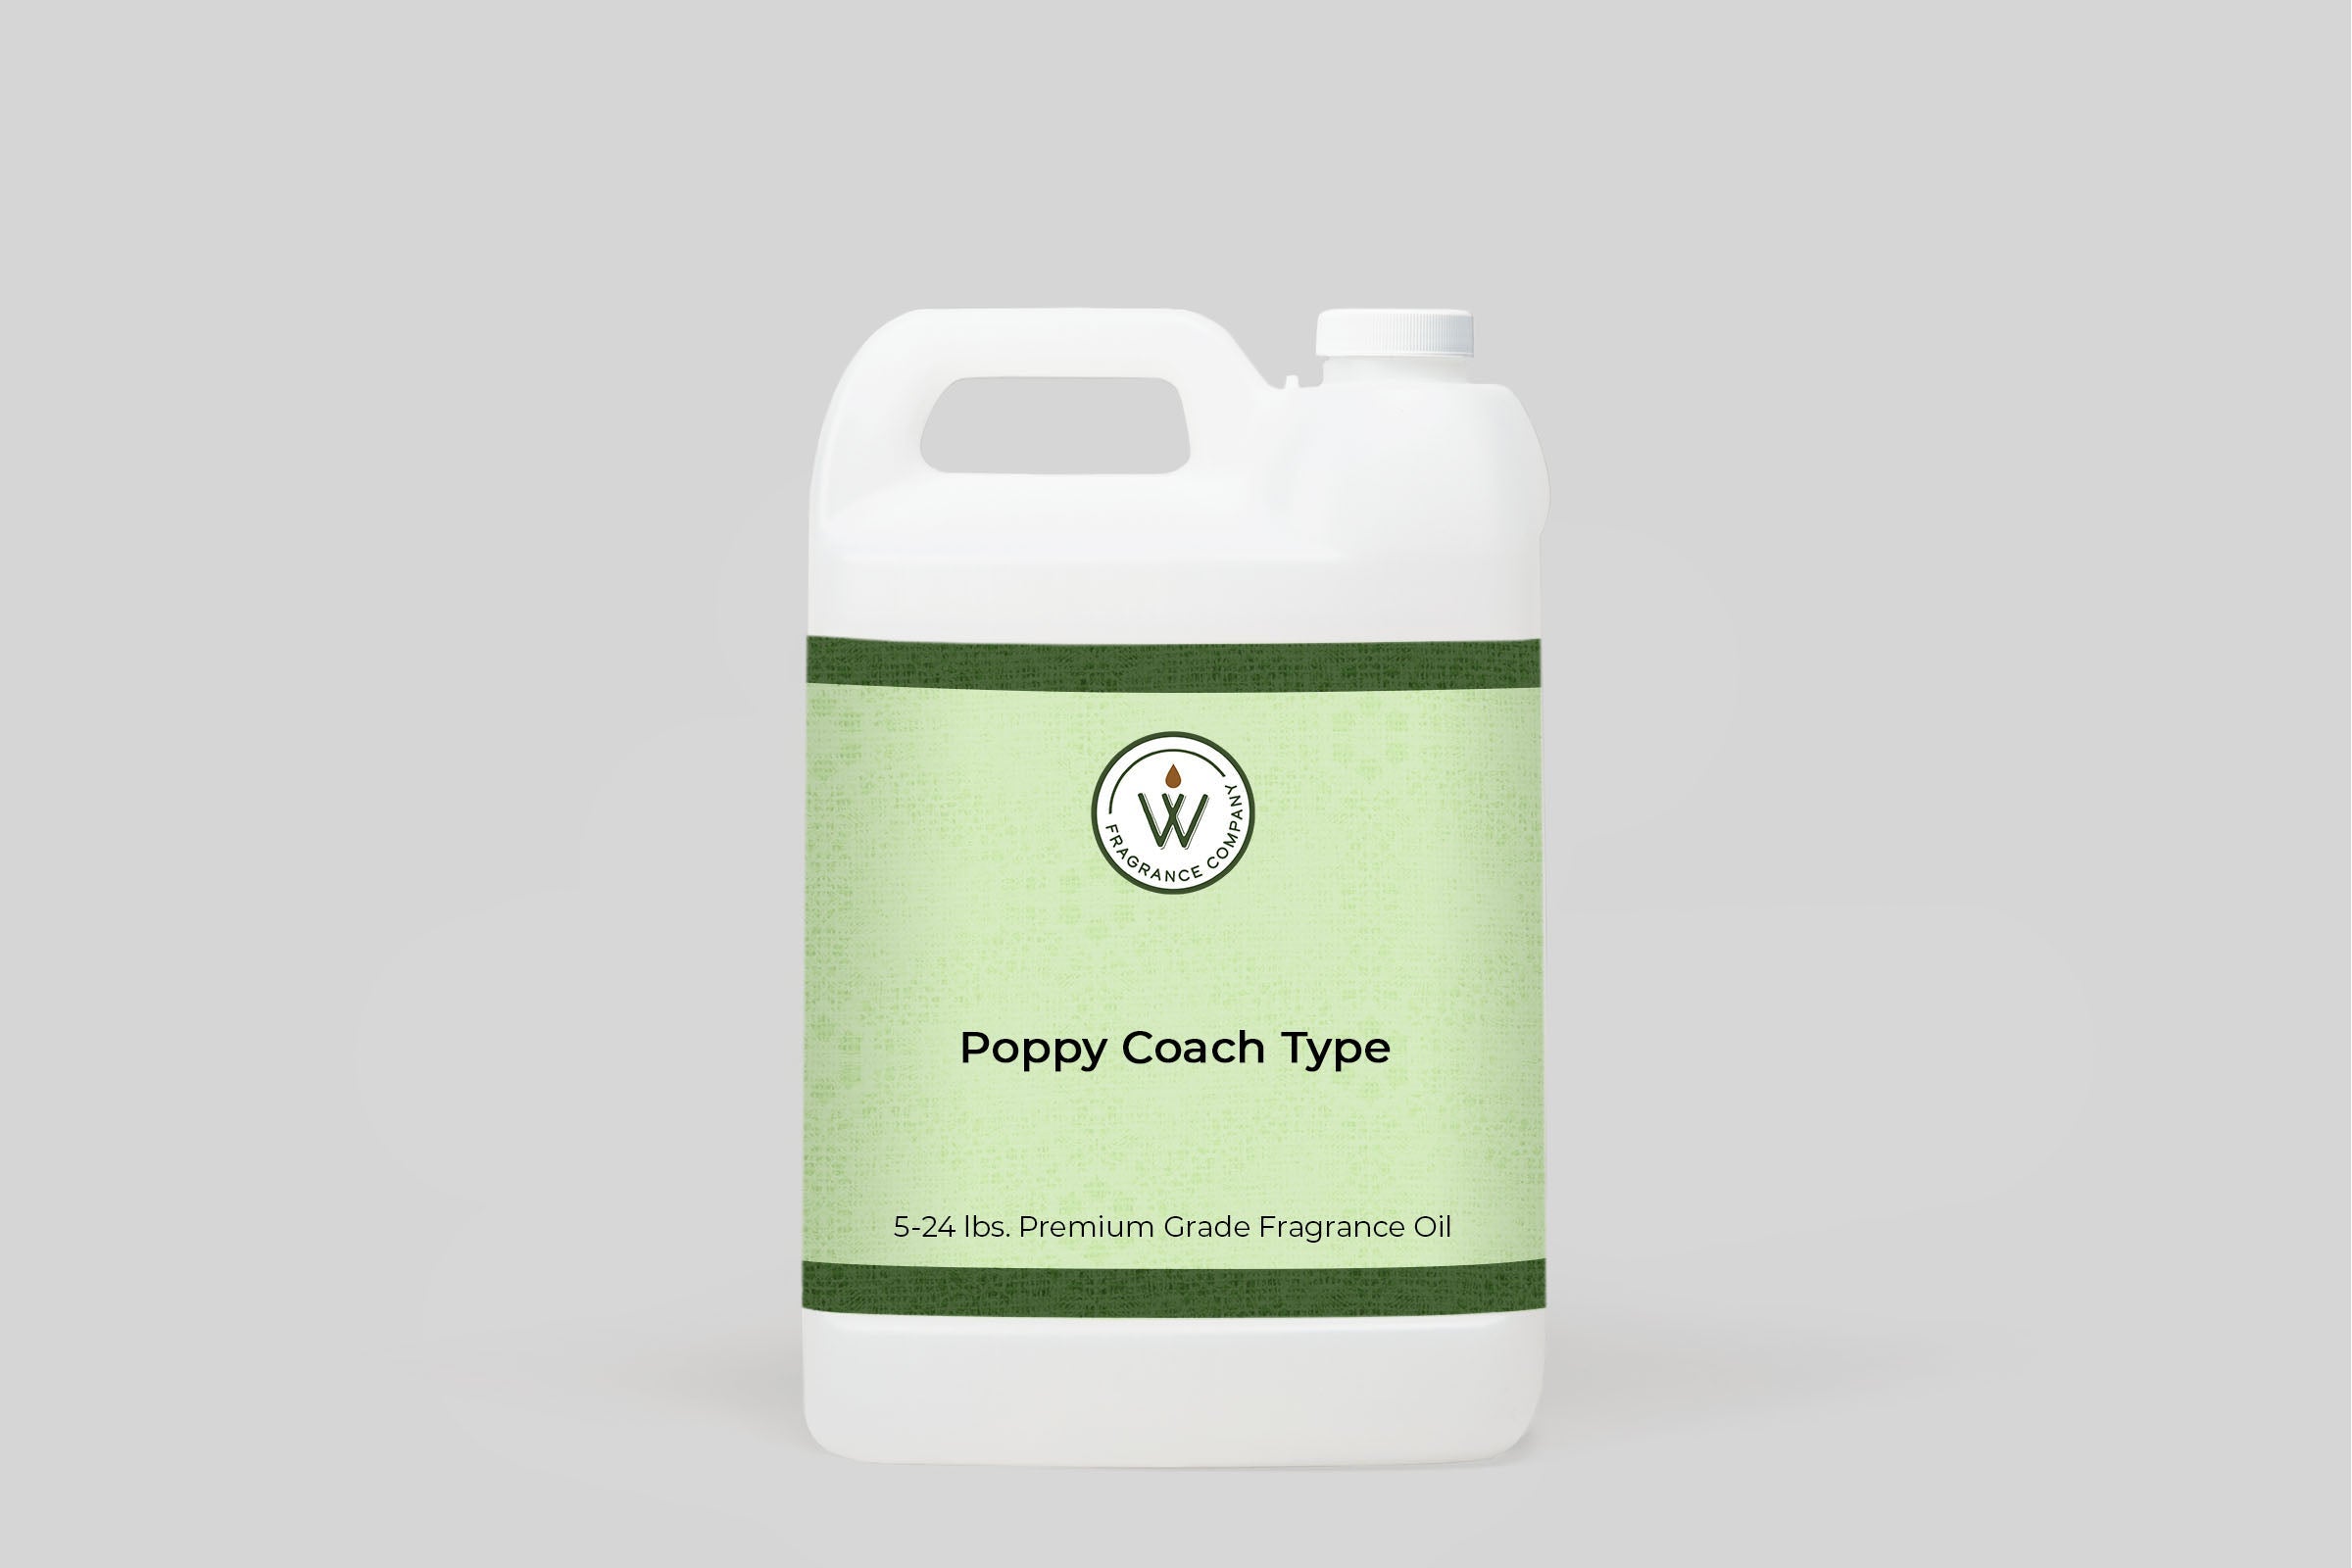 Poppy Coach Type Fragrance Oil